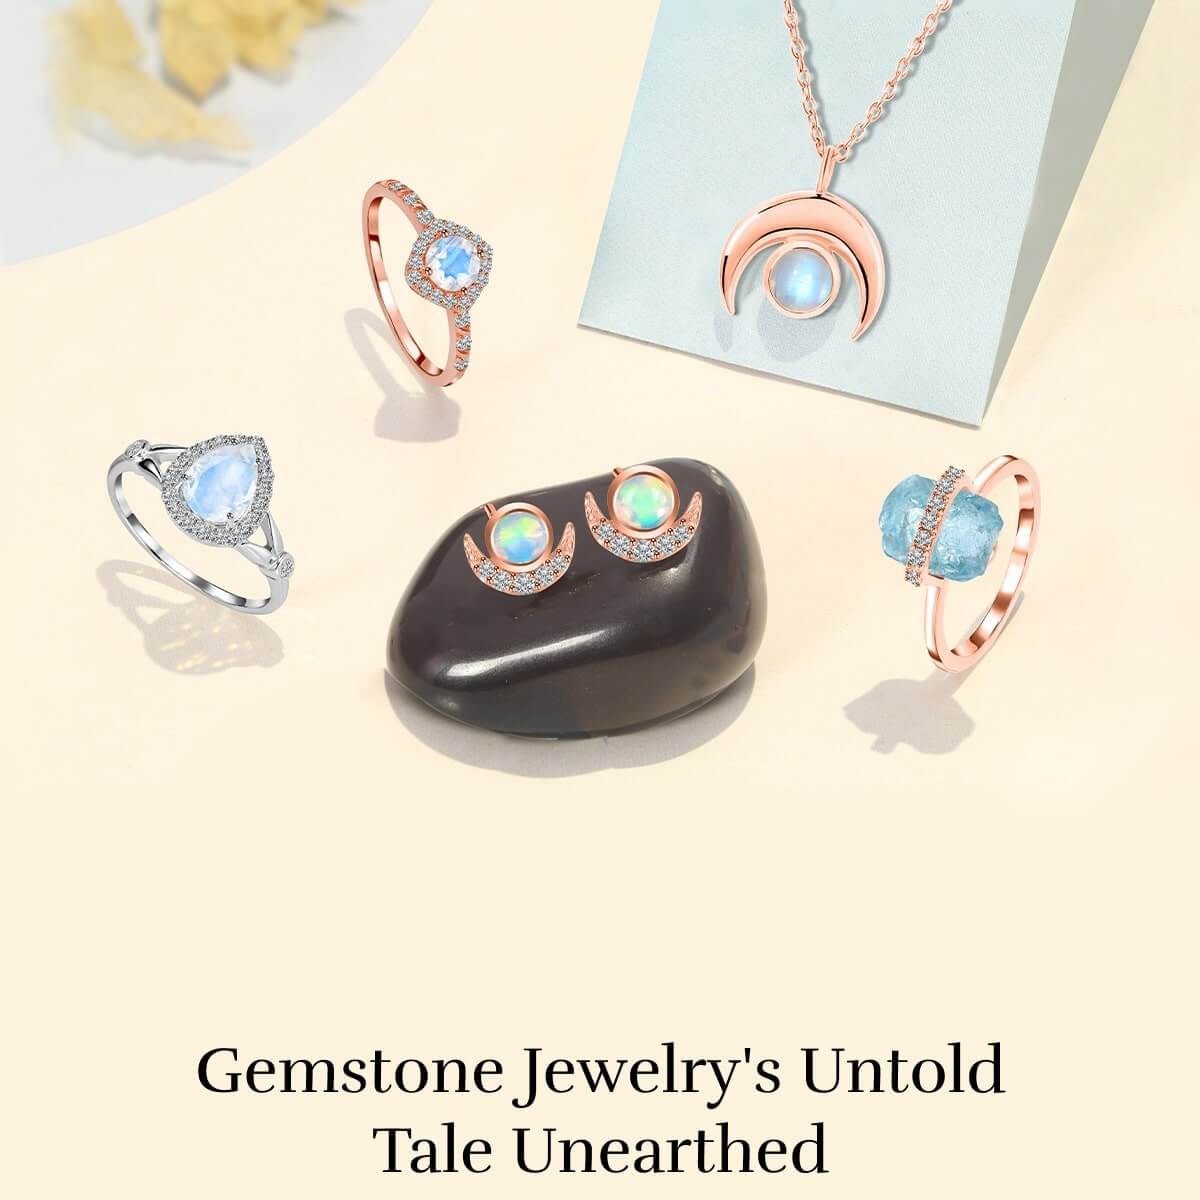 The Untold Story Of Gemstone Jewelry